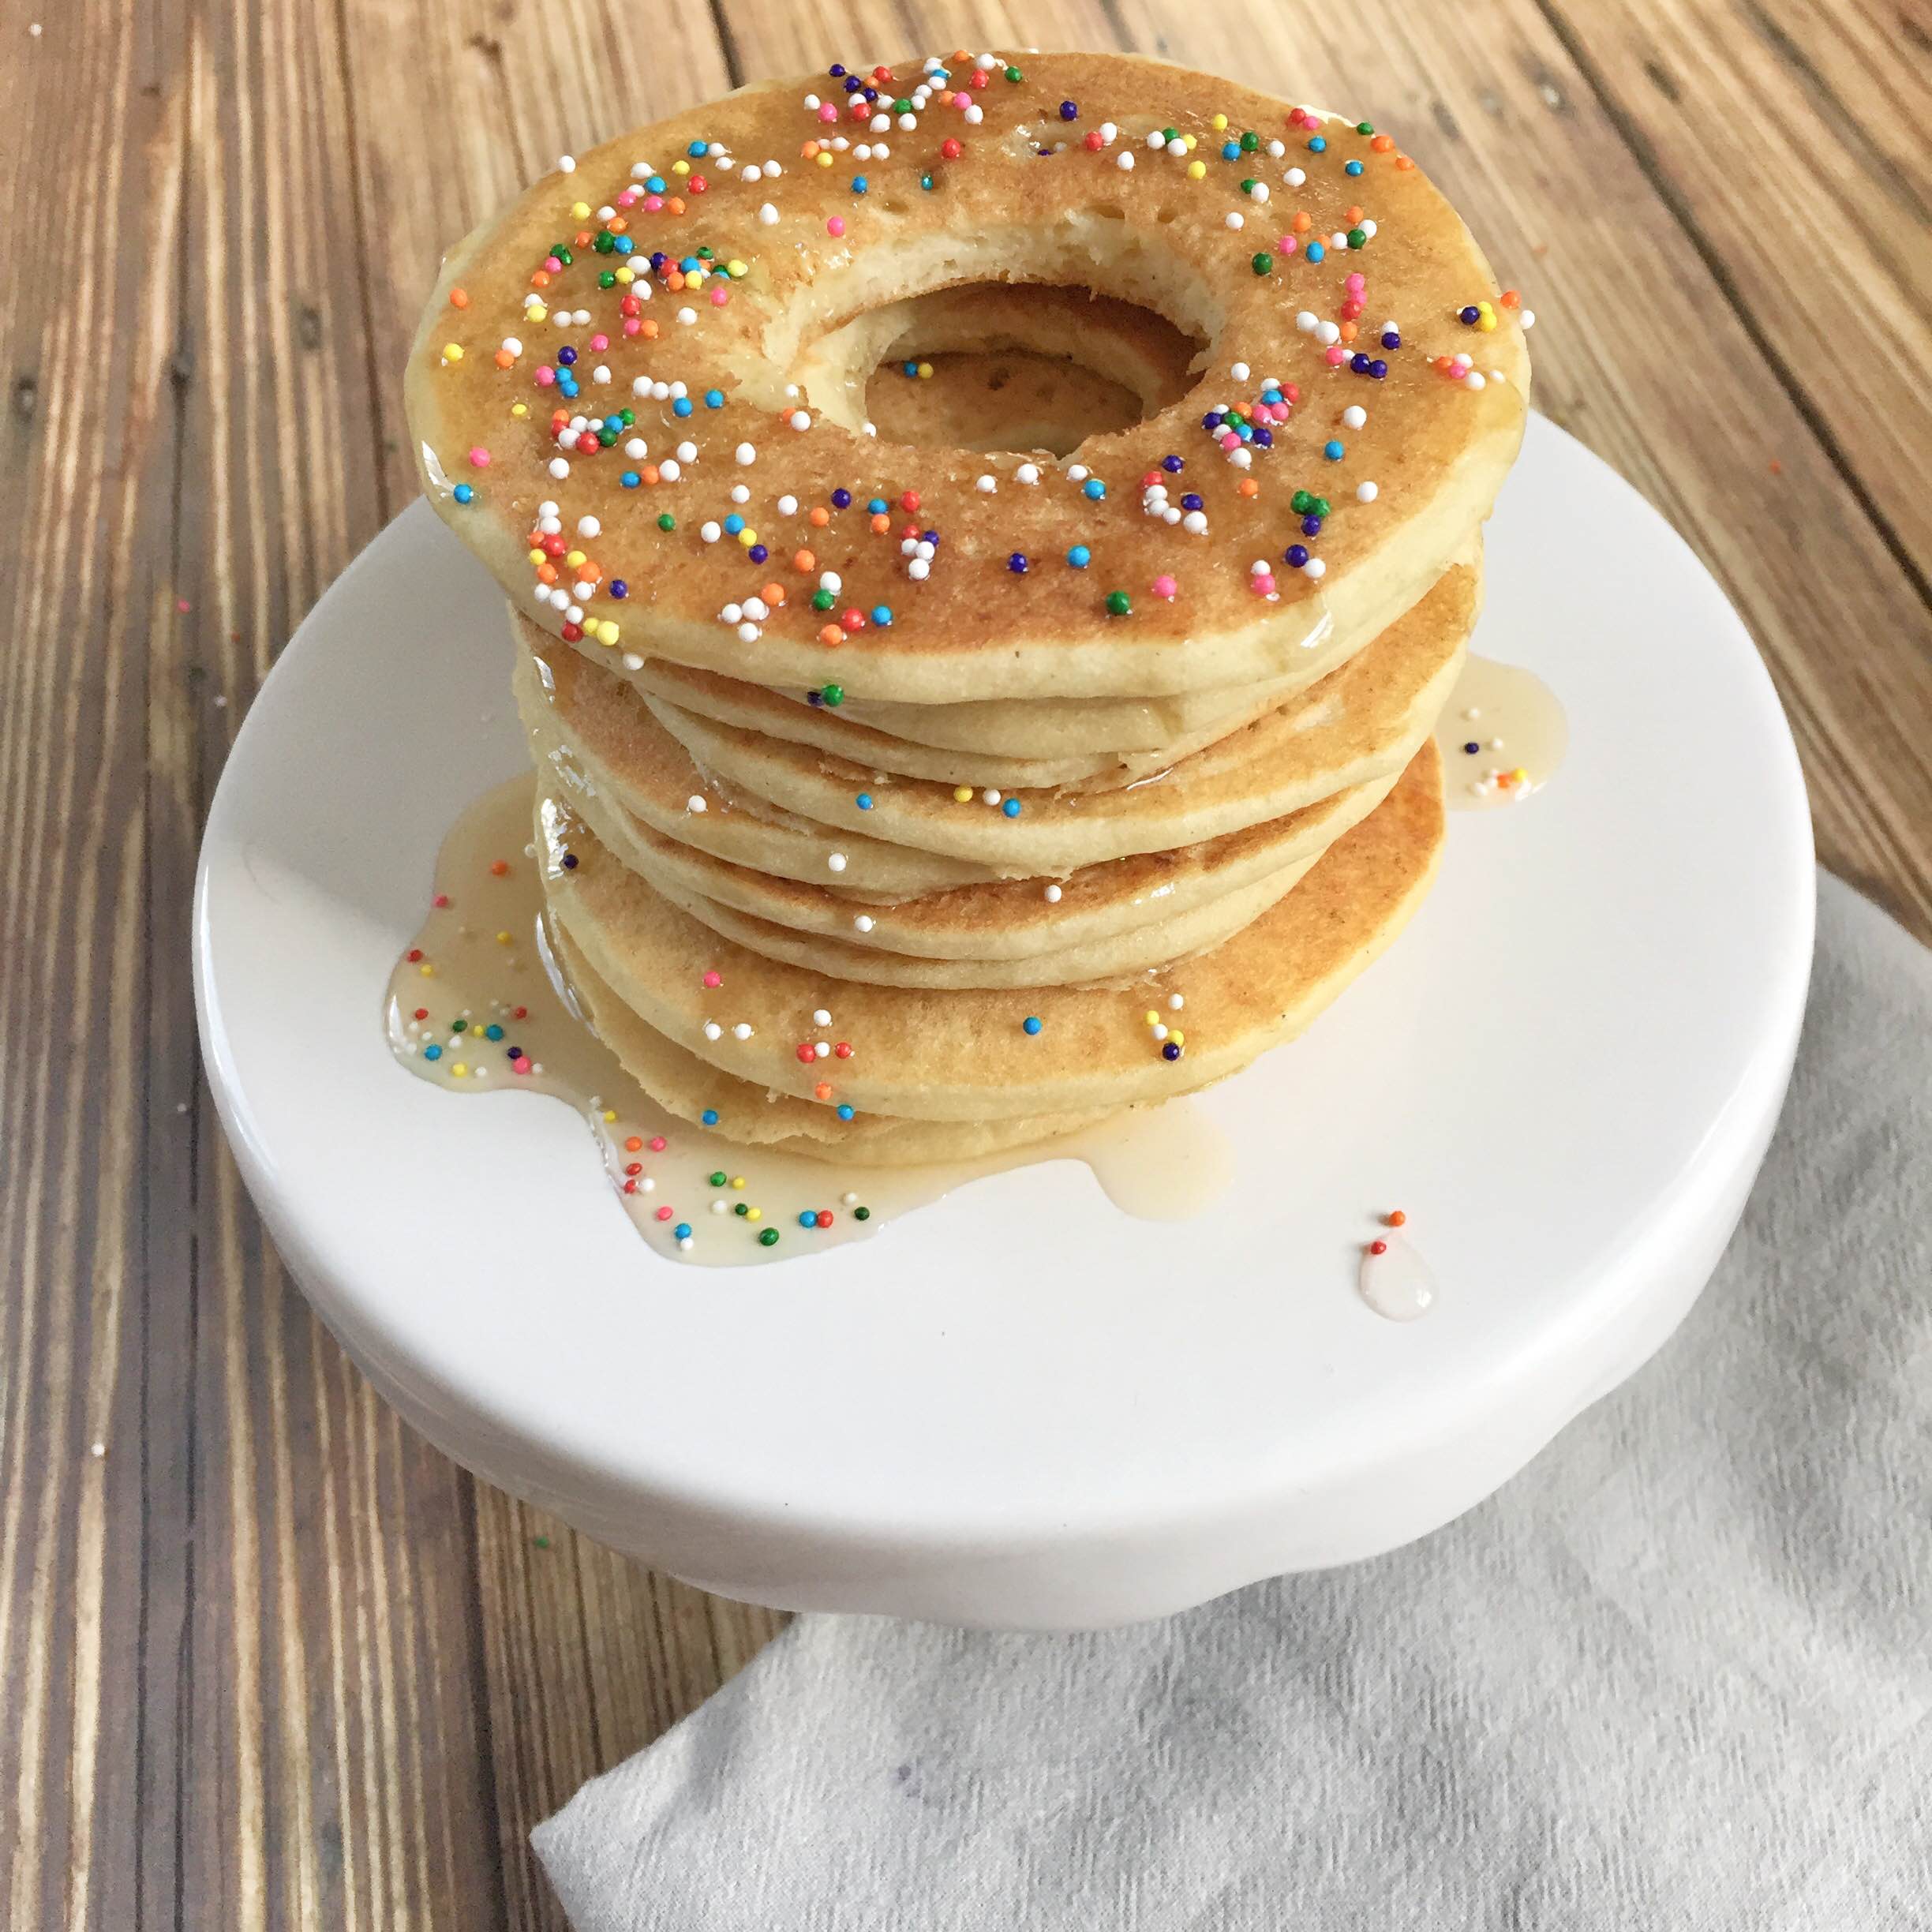 Gluten Free Donut Pancakes | GF Pancake Recipe | Donut shaped pancakes | GinaKirk.com @ginaekirk